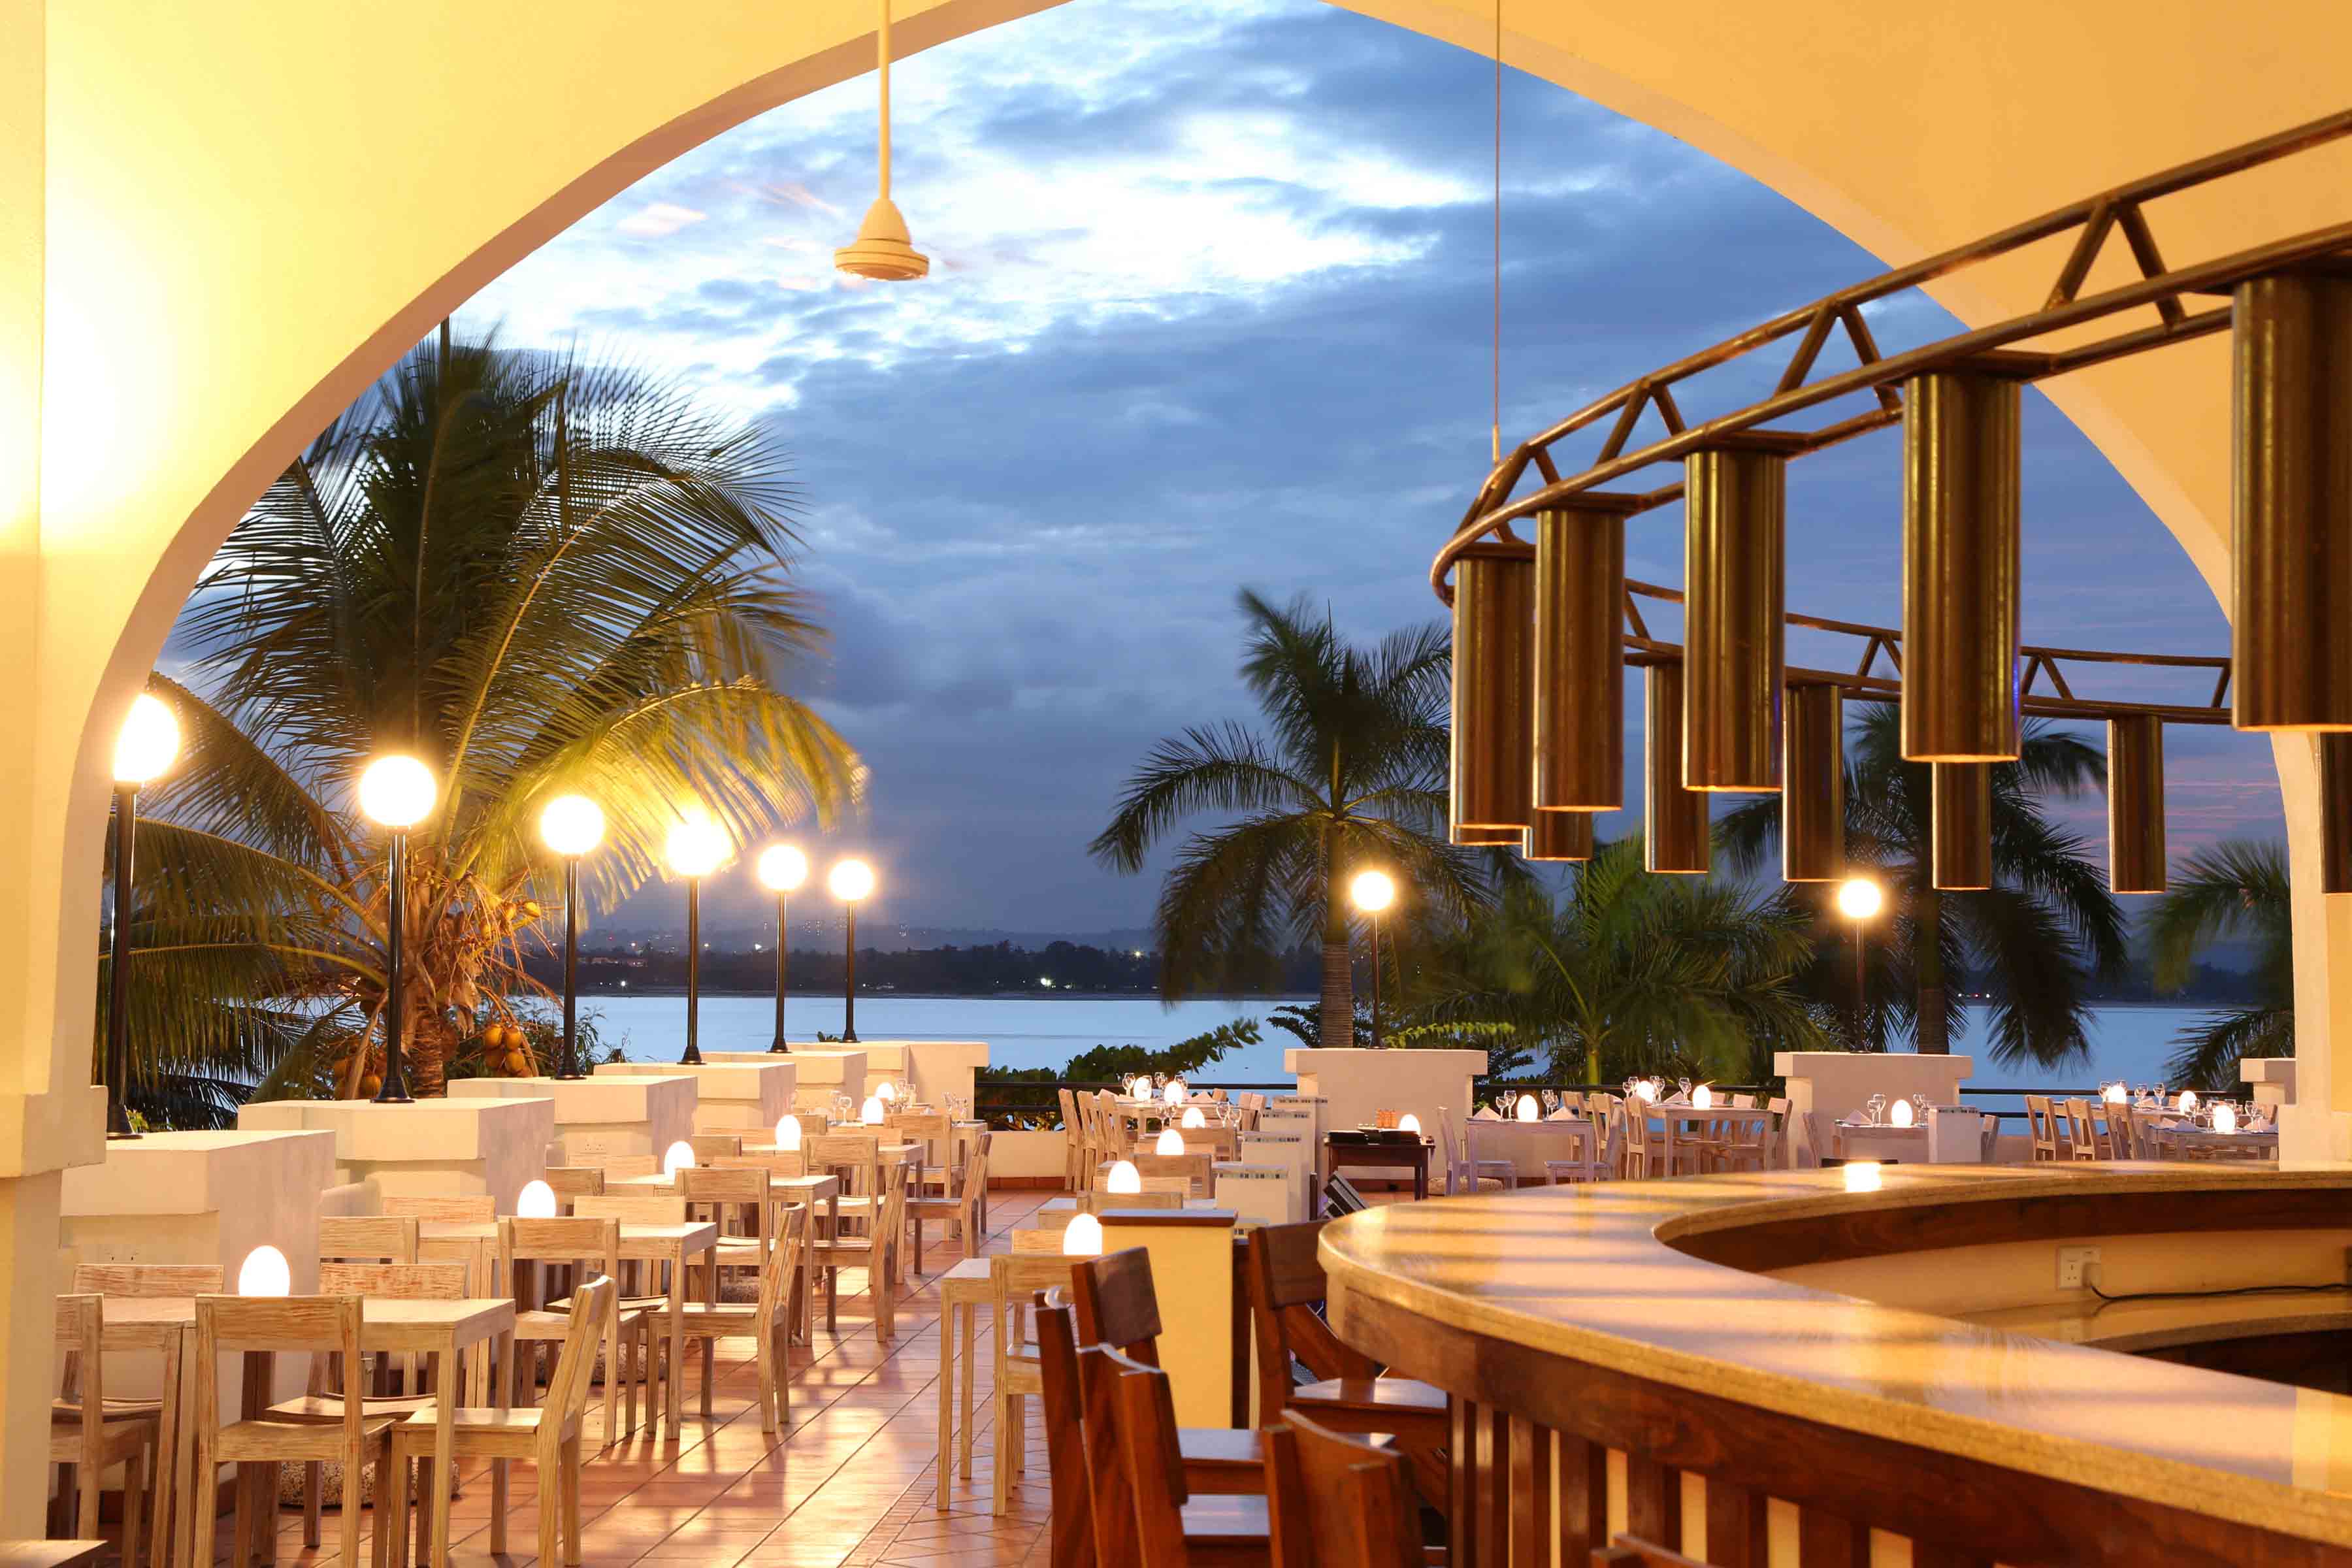 Hotels in Dar es Salaam: Terrace Restaurant Hotel Slipway